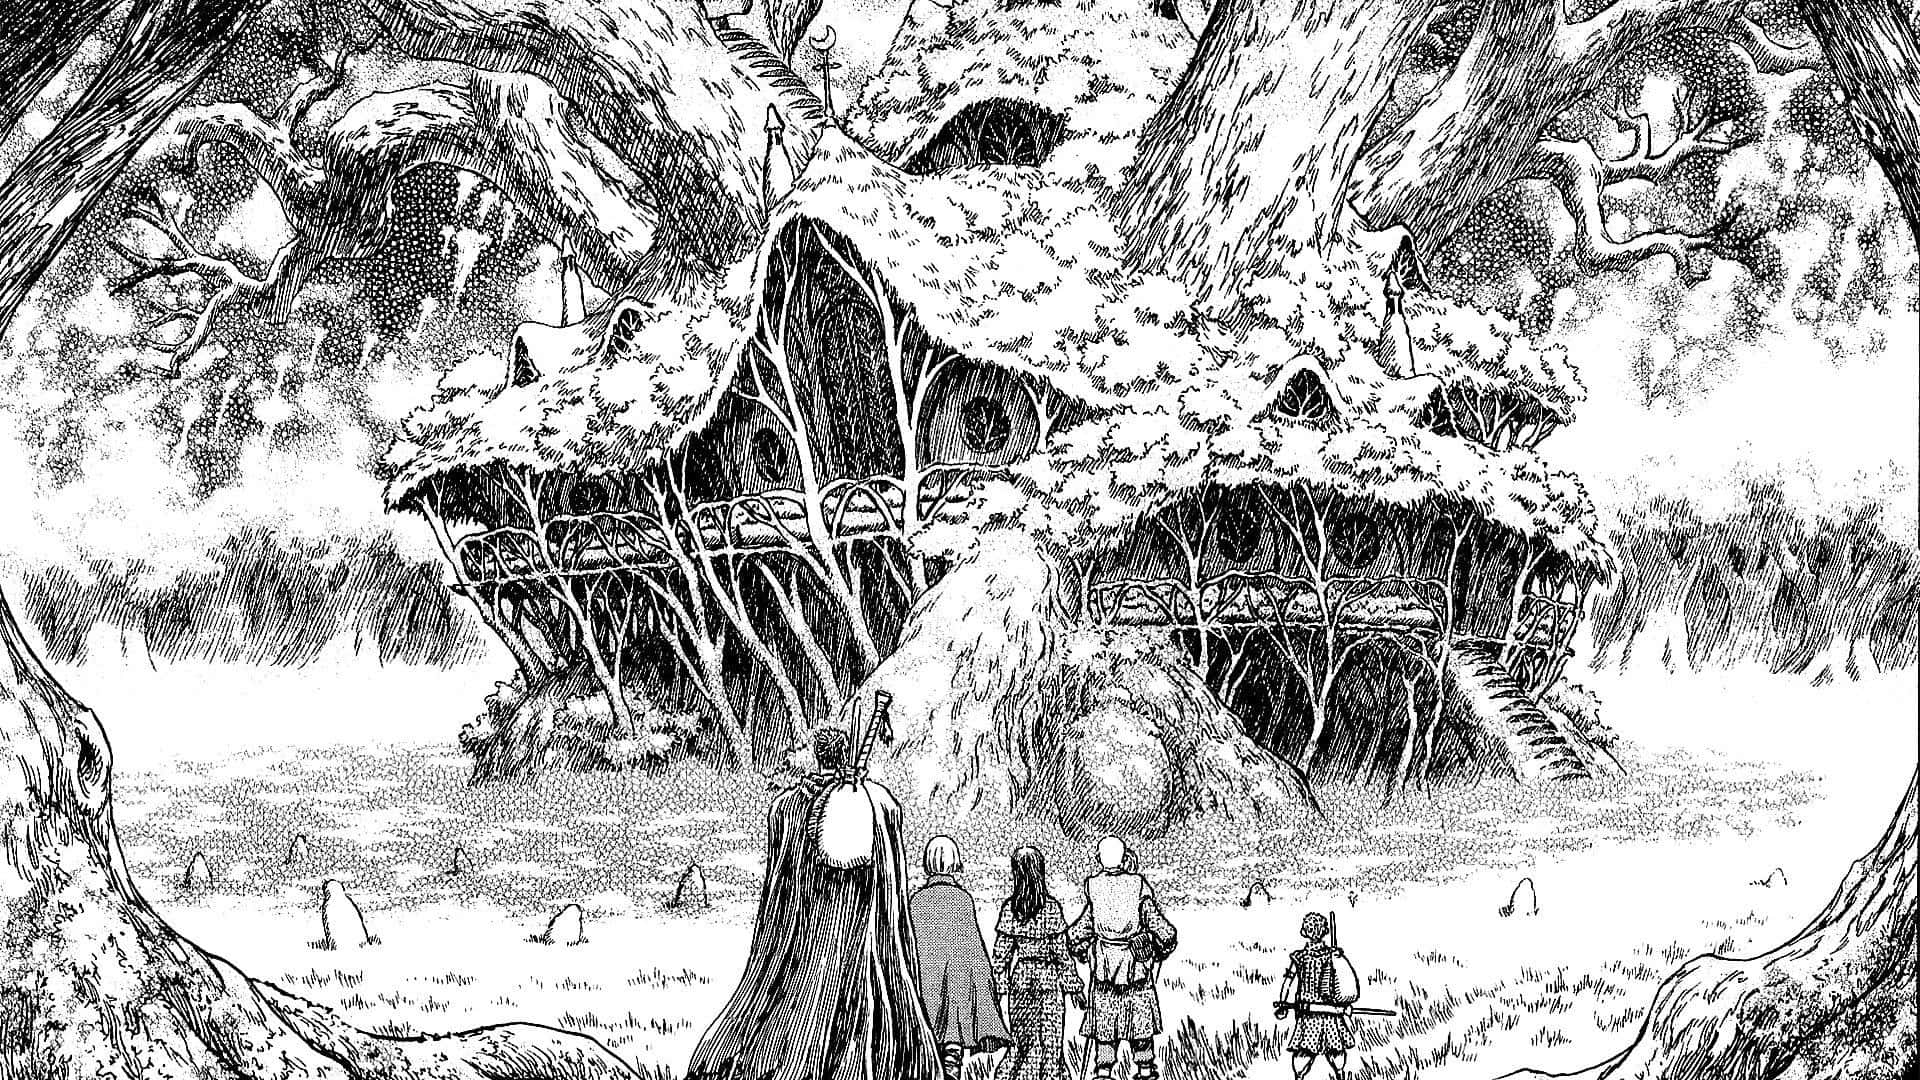 Guts, the Black Swordsman, flanked by his fellow companions as featured in Kentaro Miura's Berserk manga. Wallpaper